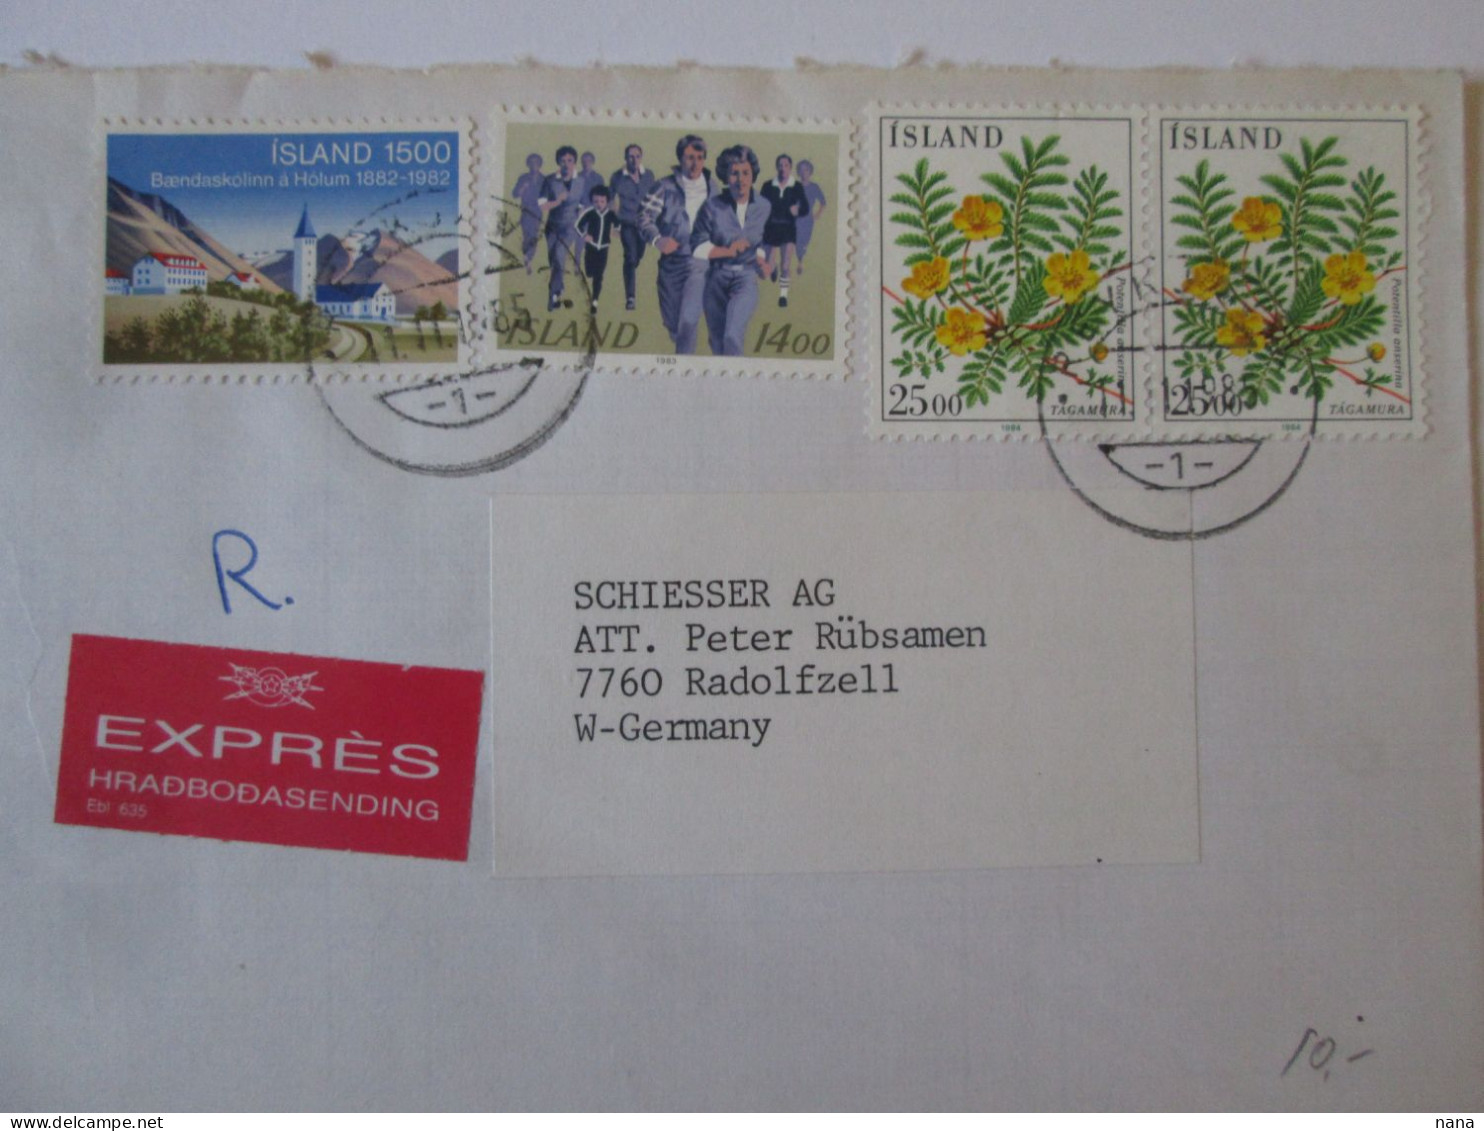 Islande/Iceland Enveloppe Recomandee Expres 1985/Registered Cover Expres 1985 - Briefe U. Dokumente